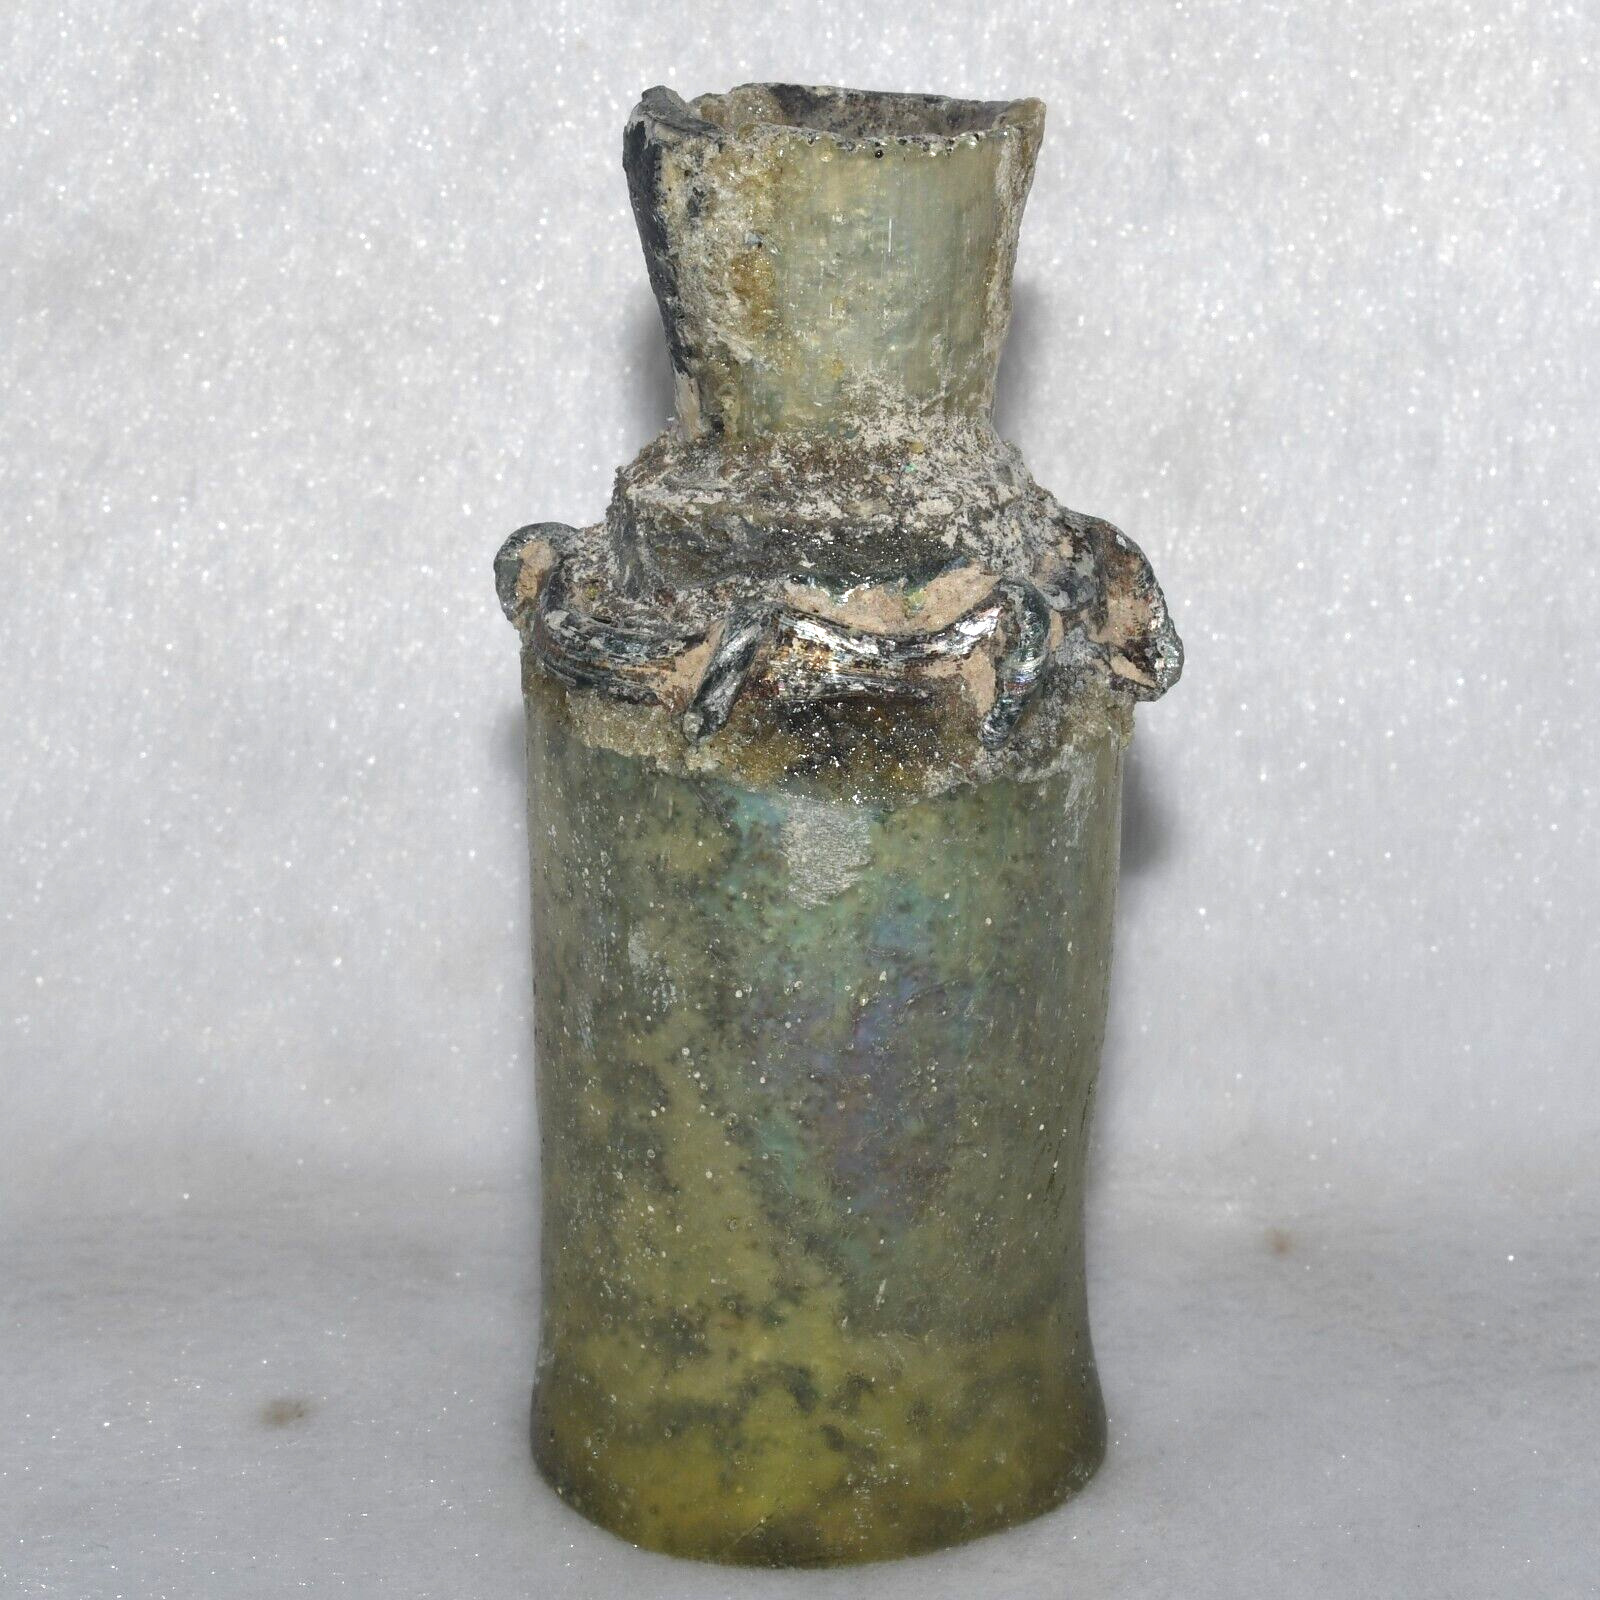 Rare Large Ancient Roman Glass Bottle Vase Vessel Circa 1st - 2nd Century AD